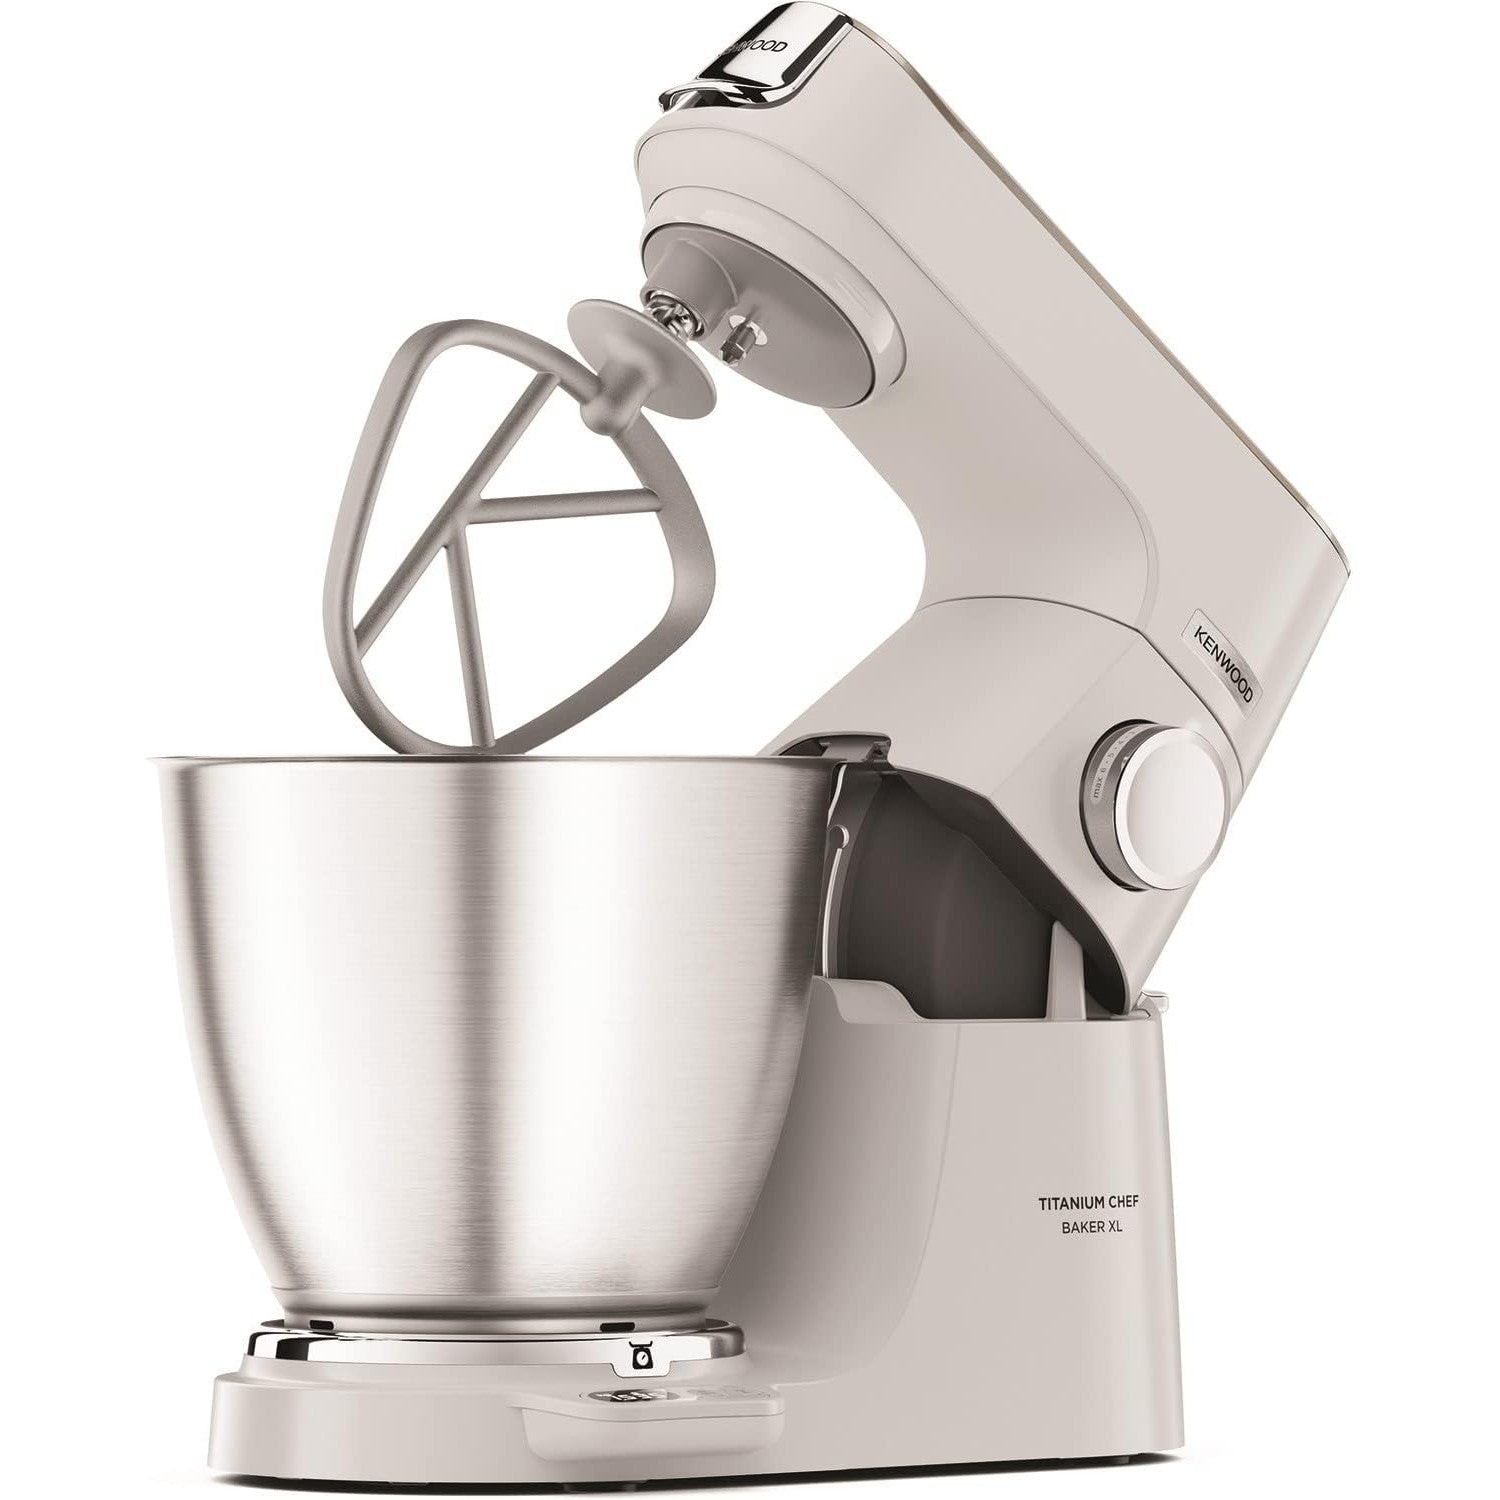 Kenwood Titanium Chef Baker XL Stand Mixer - White - New